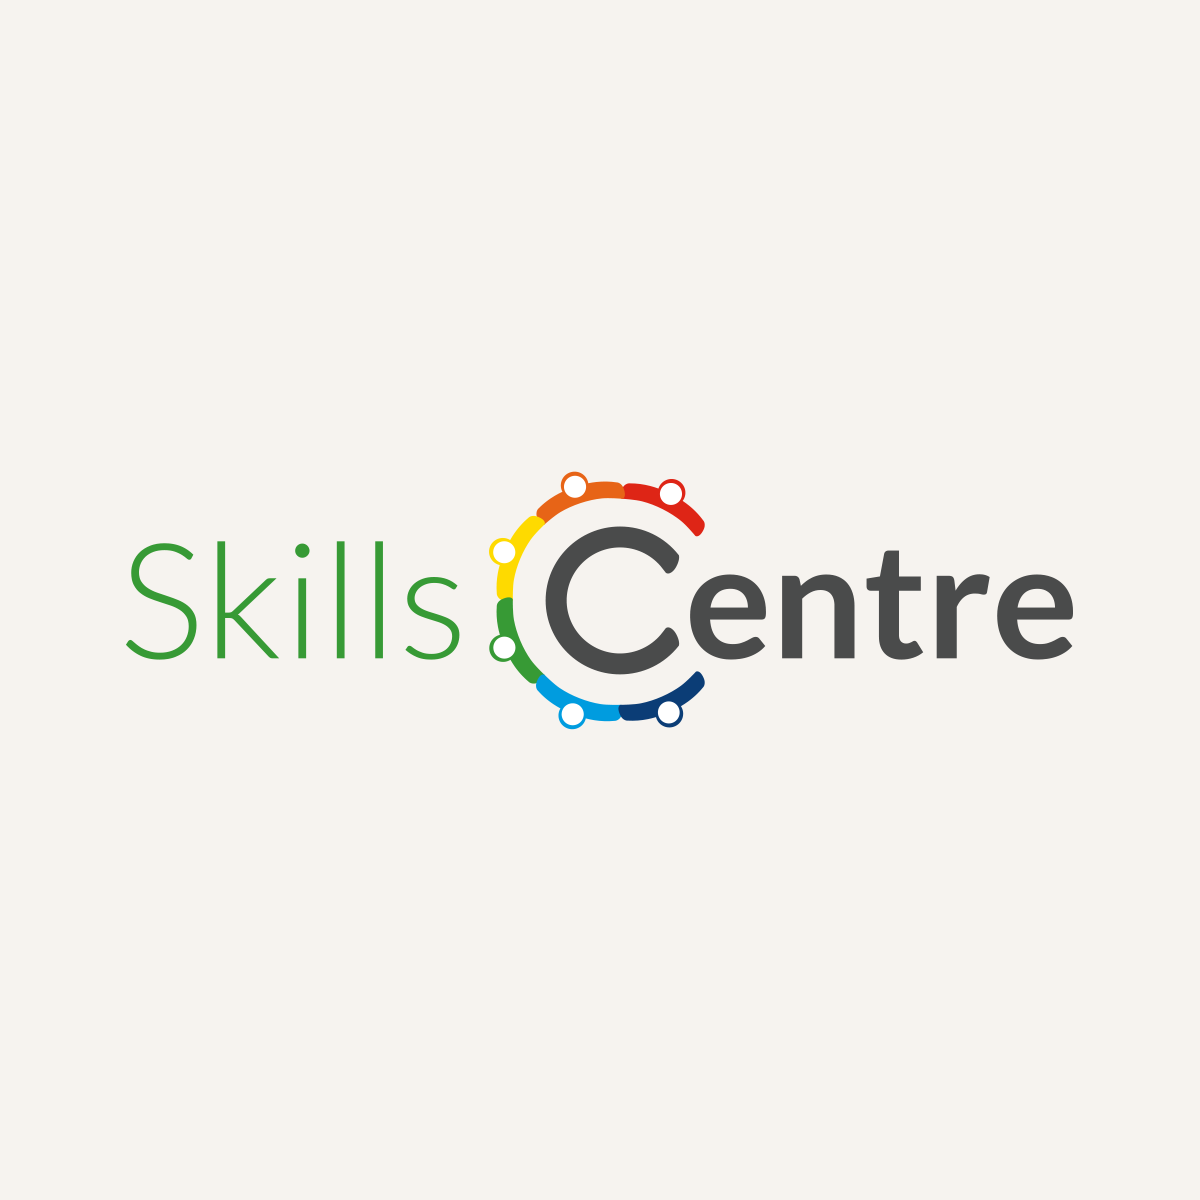 The Skills Centre in Trail BC logo design, brand identity, graphic design and printing